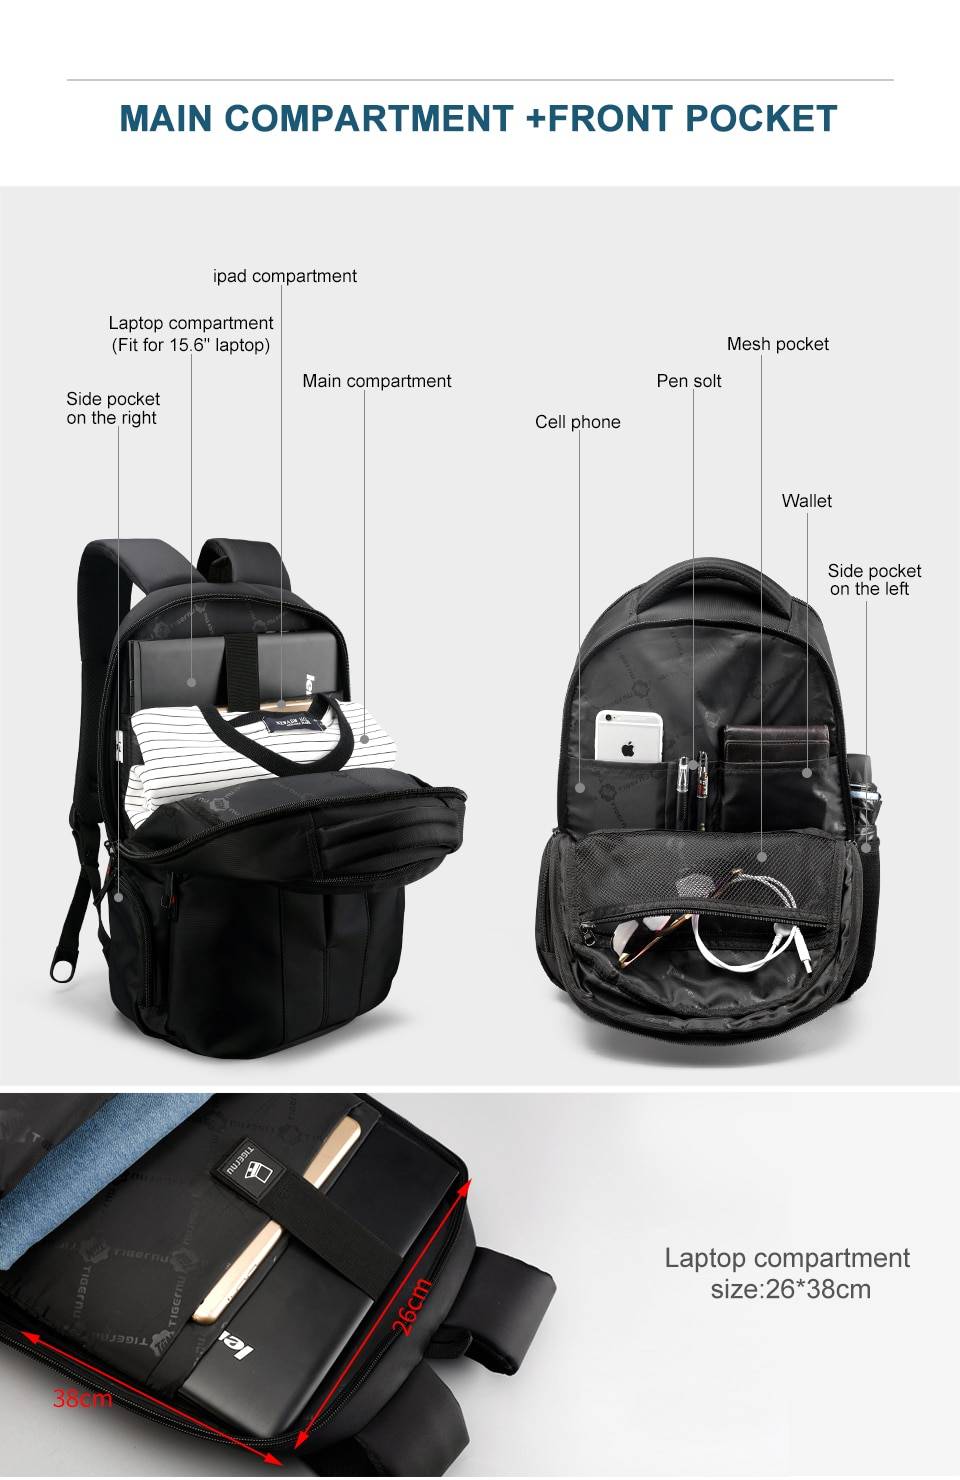 Mr. International - 15.6 inch Laptop Backpack with TSA Lock